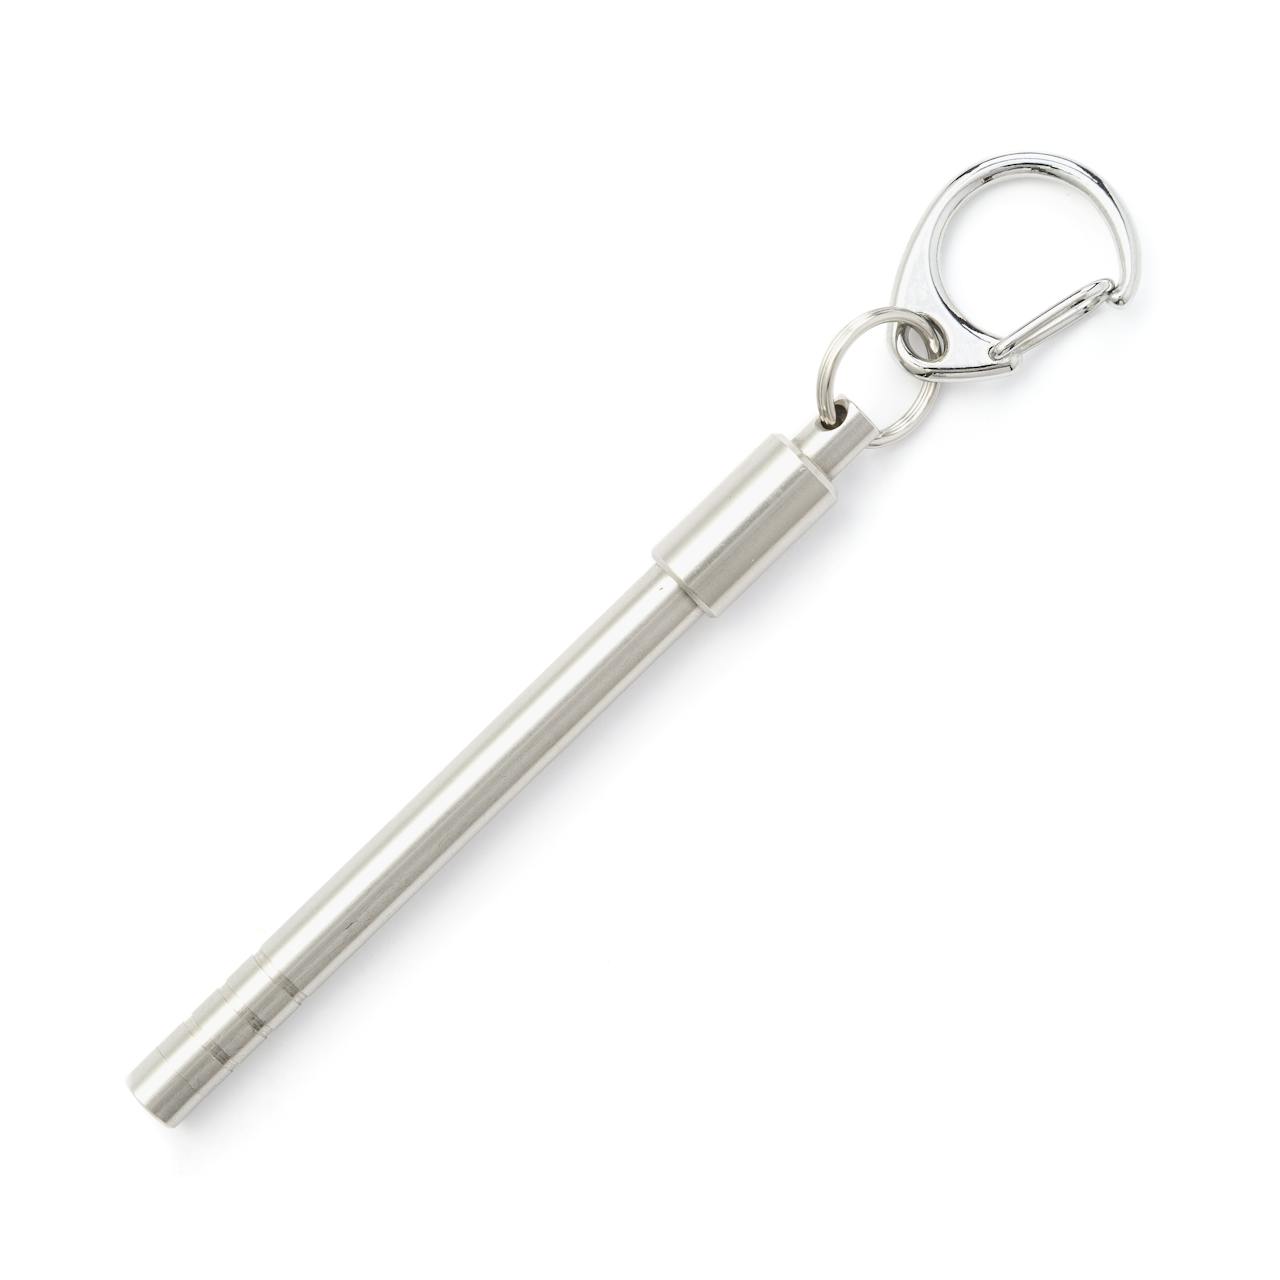 TEC Accessories  PicoPen - Keychain Pen